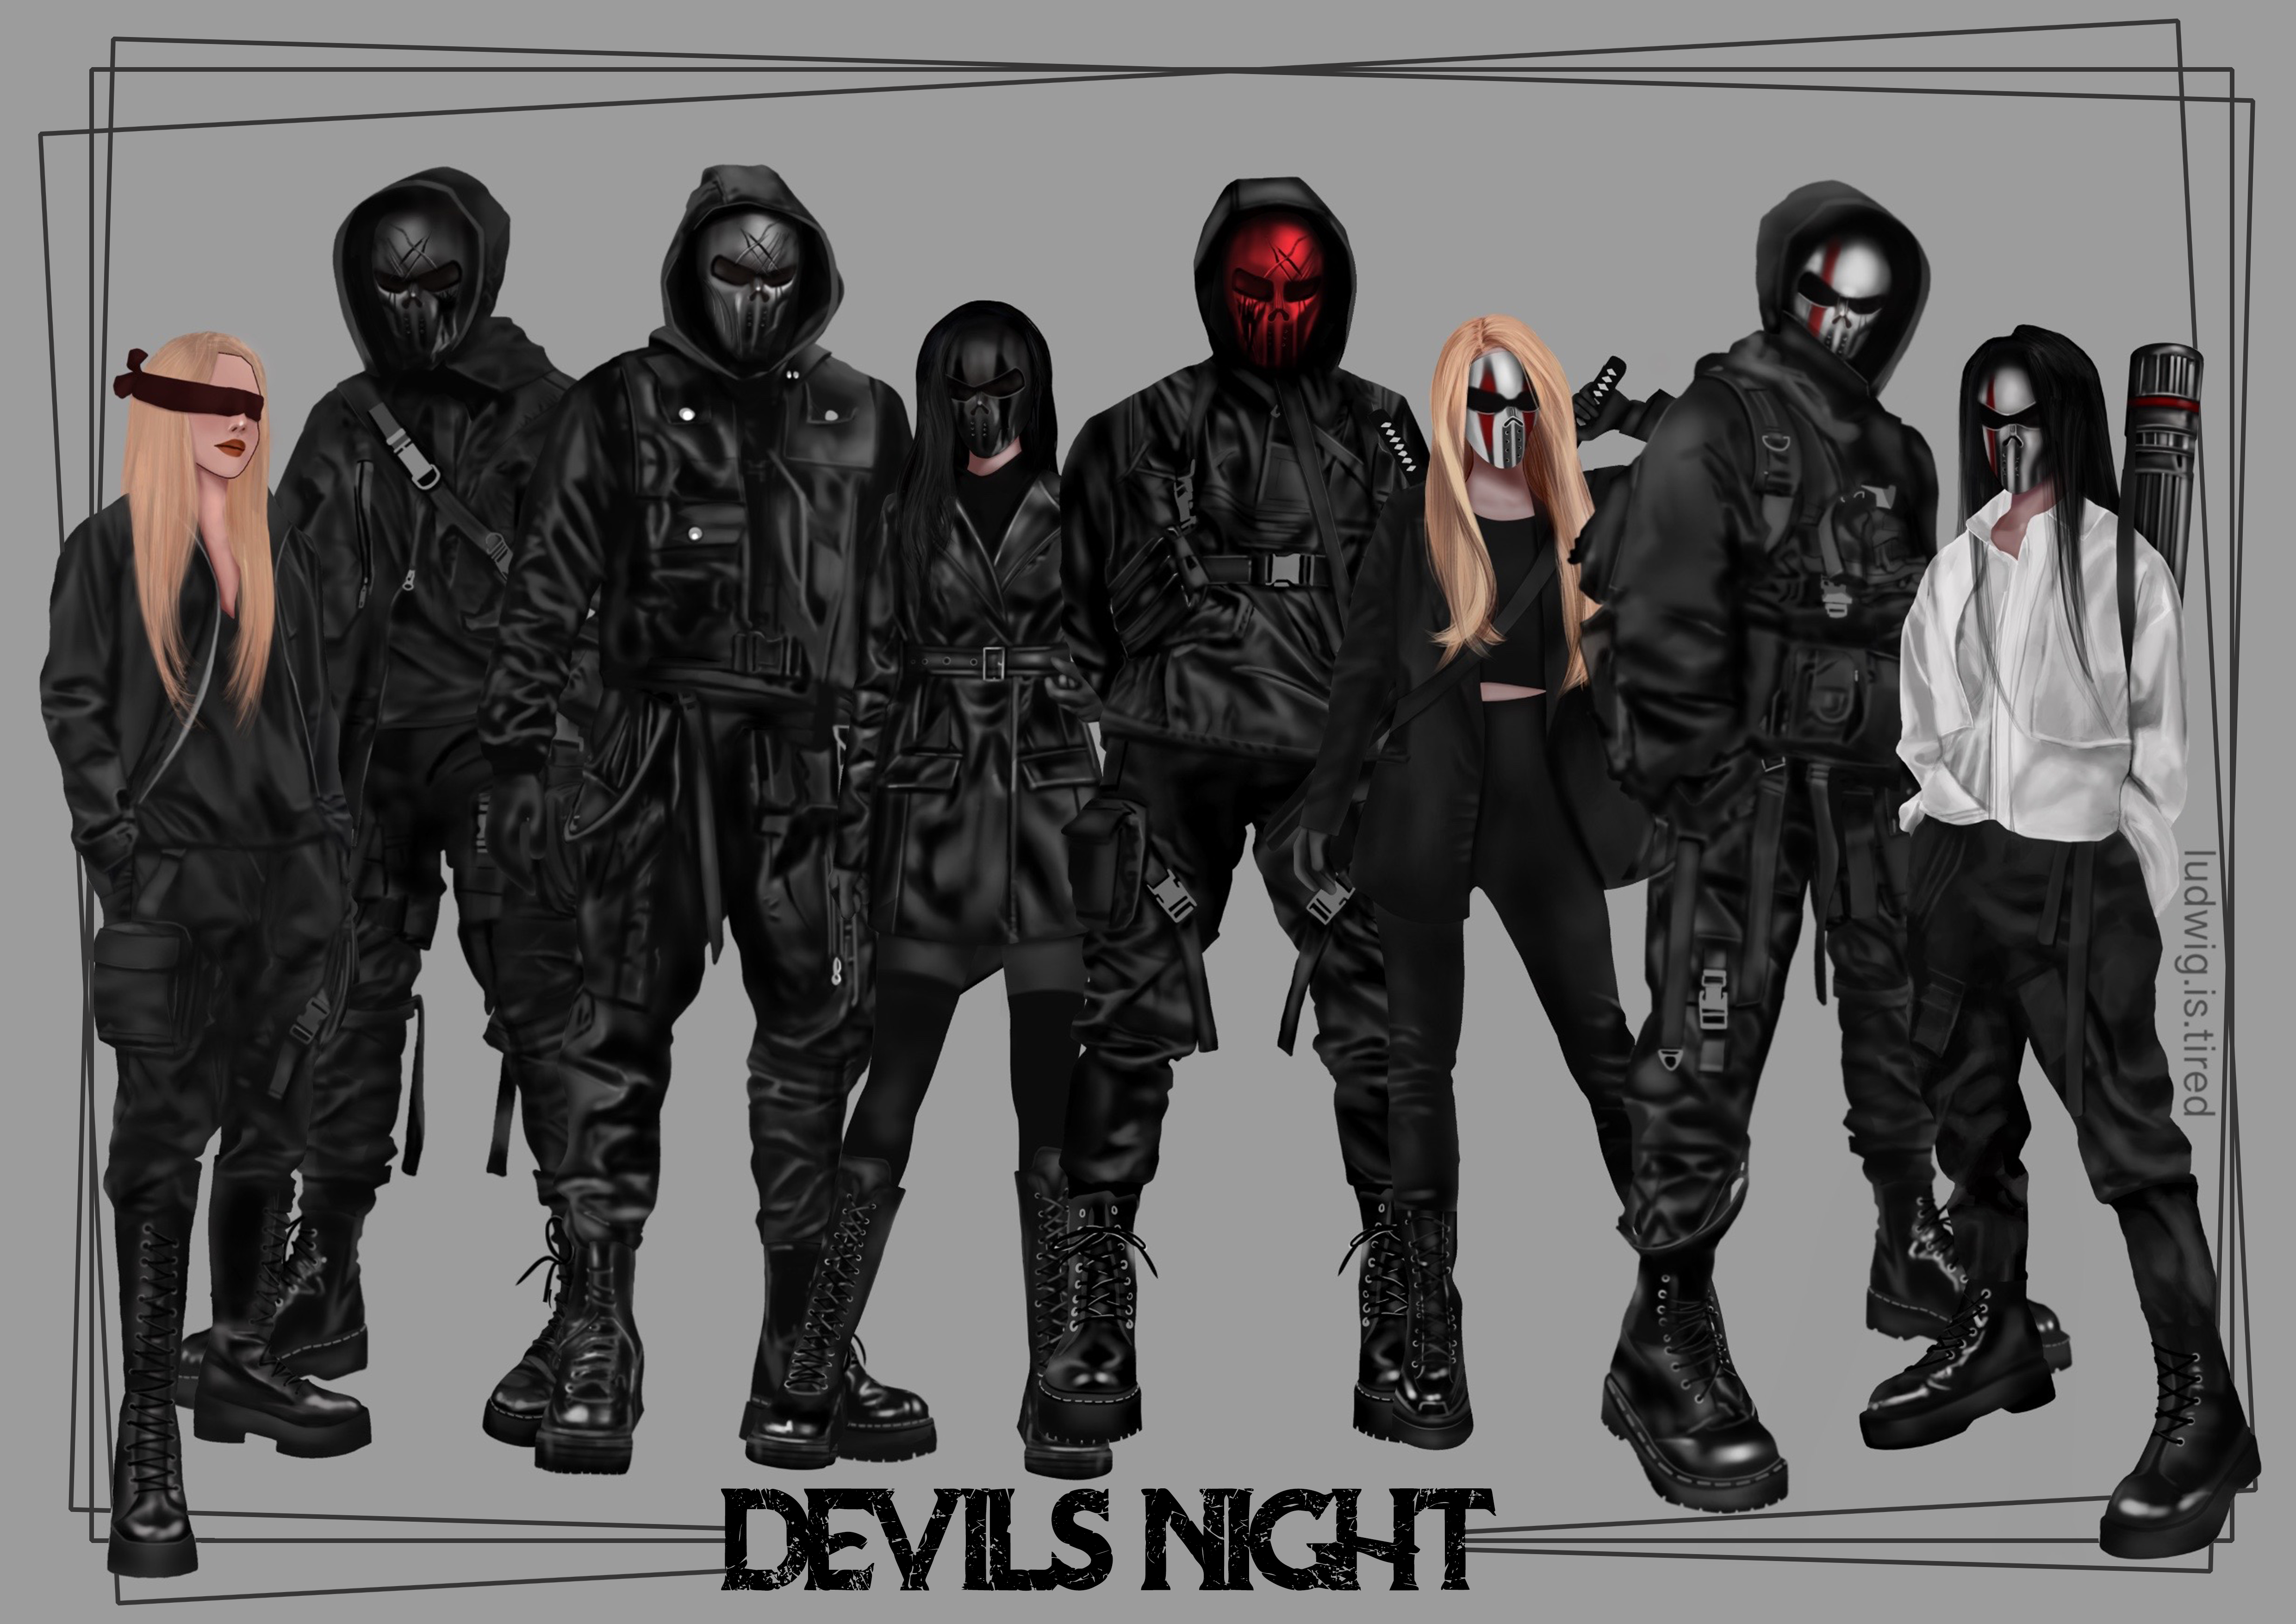 Devils Night Characters - Poster - Devils Night Series - Penelope Doug